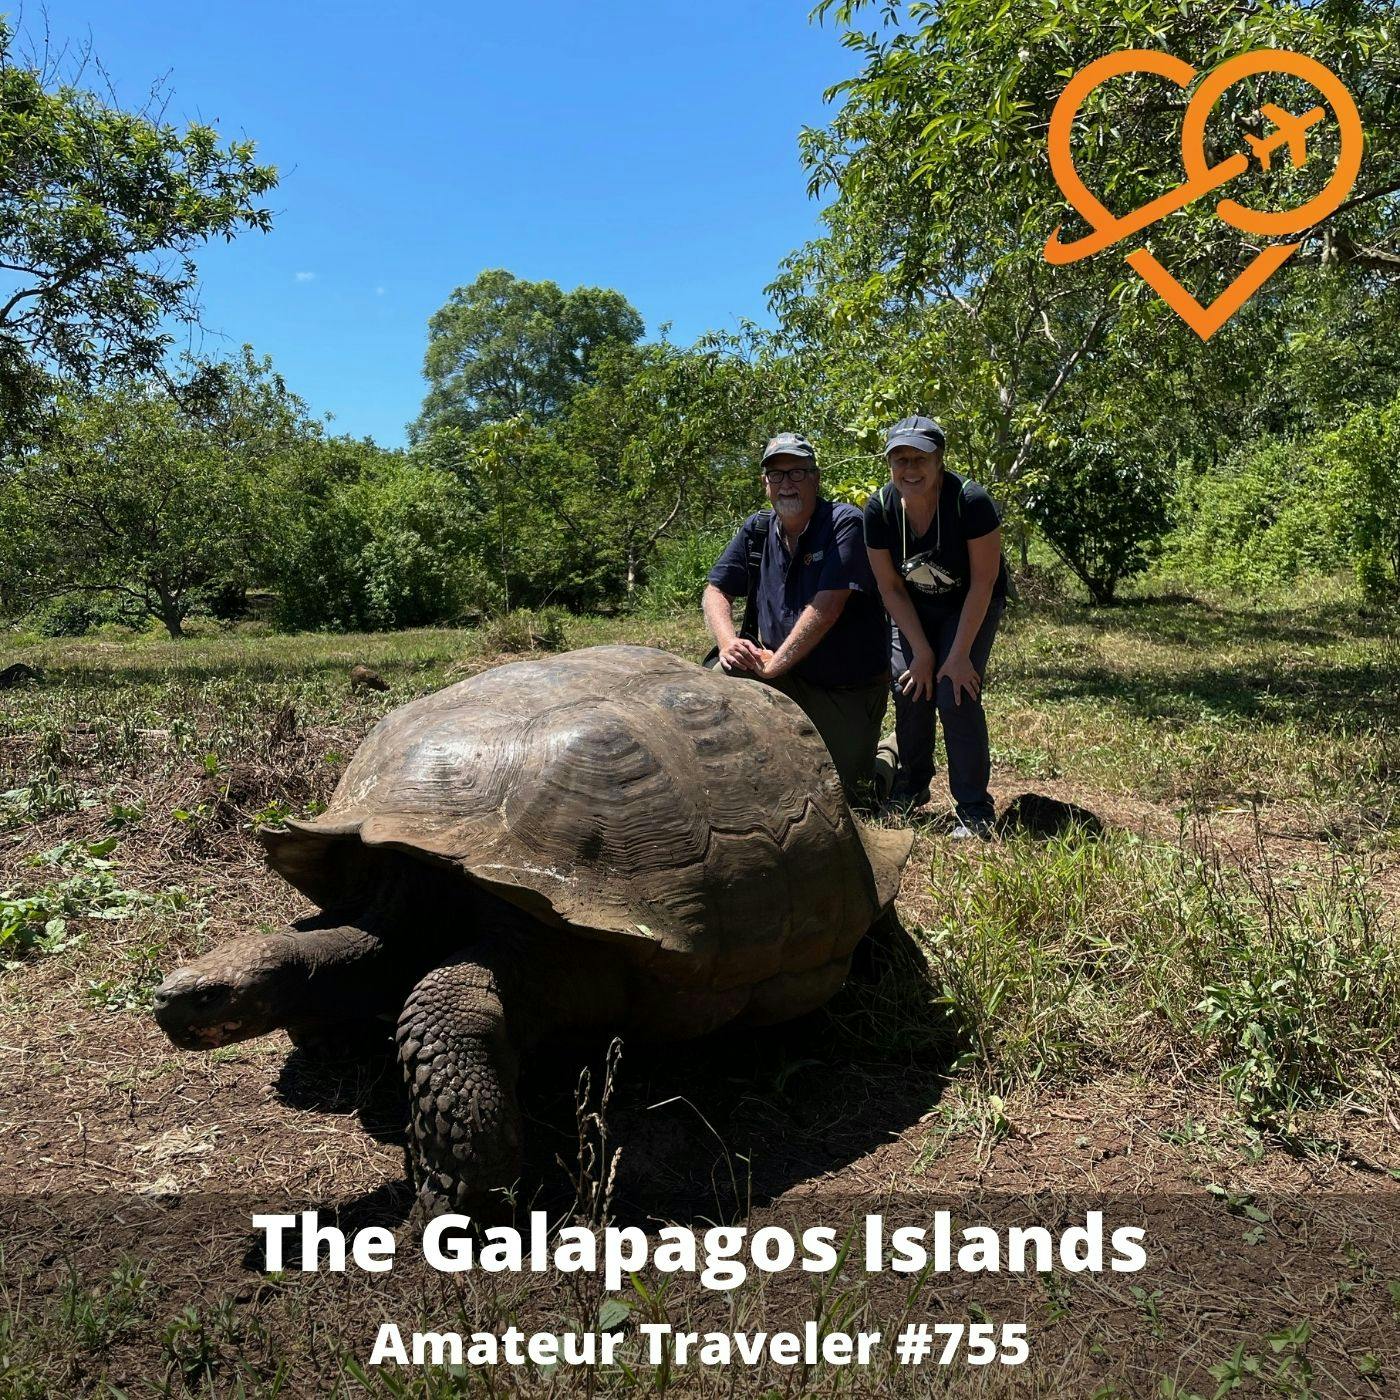 AT#755 - Travel to the Galapagos Islands, Ecuador